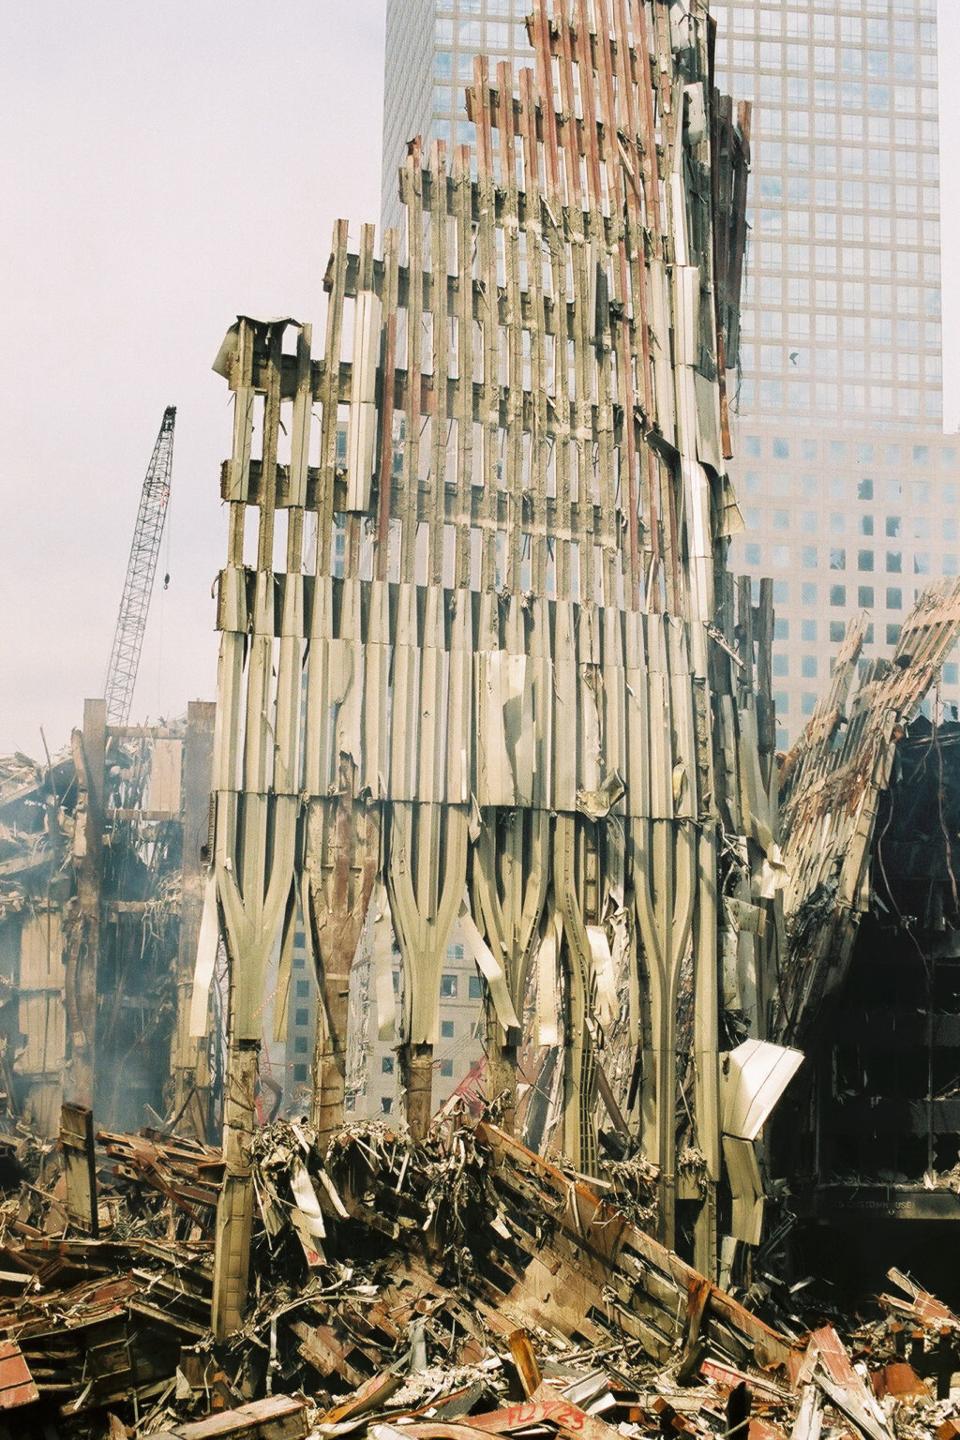 Wreckage from World Trade Center at ground zero on September 11, 2001. (Photo Credit: FEMA)